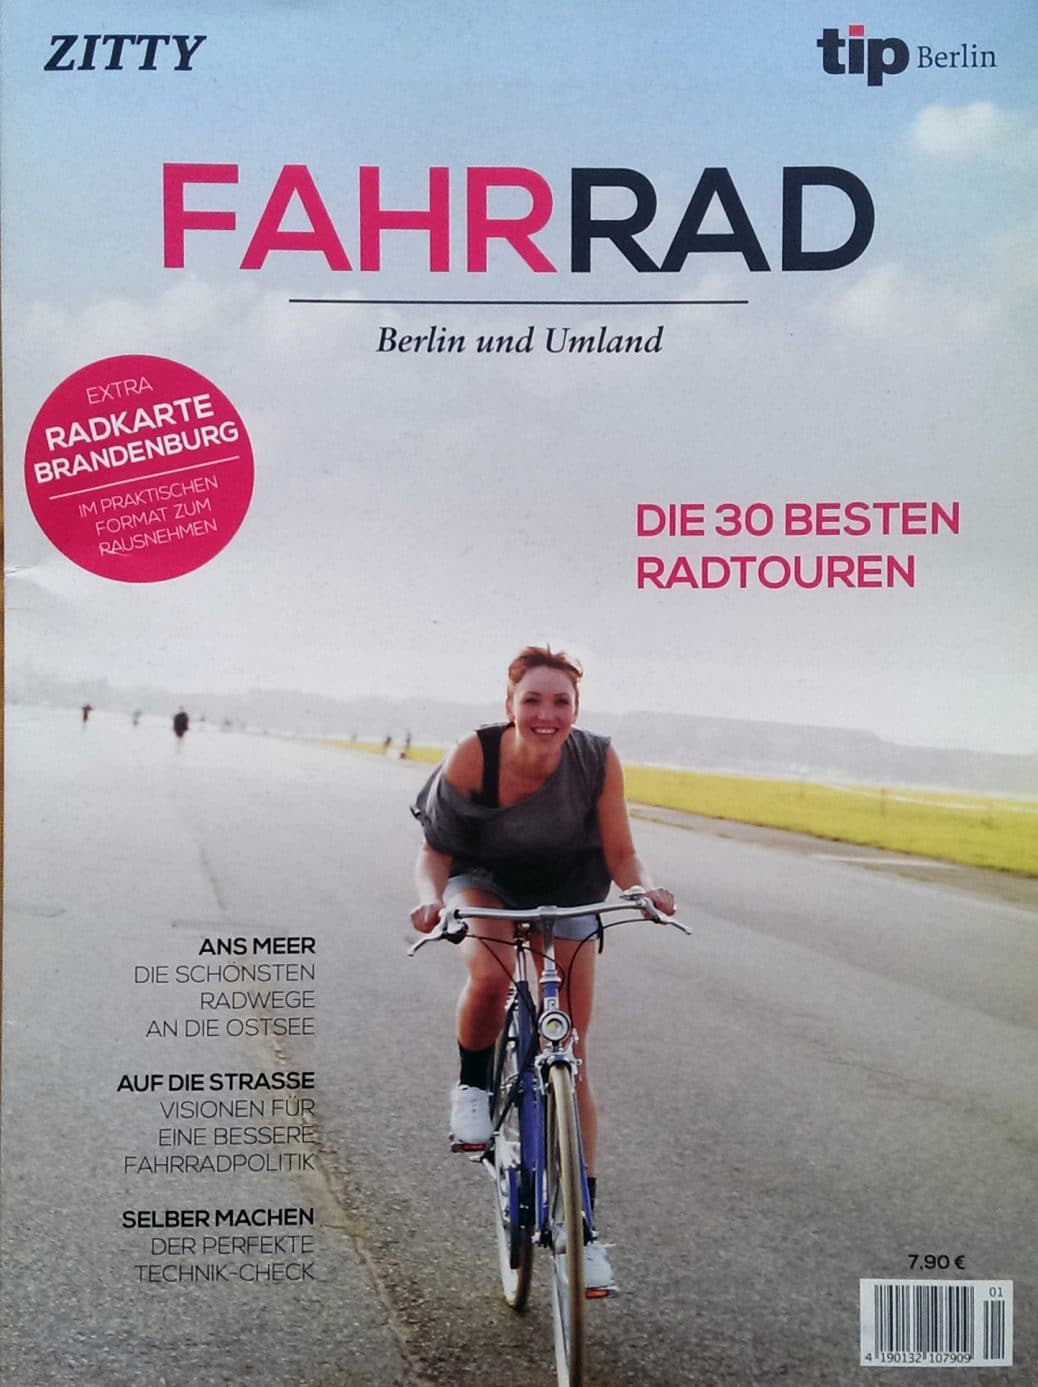 "Fahrrad" Magazin 2015 Radelmaedchen